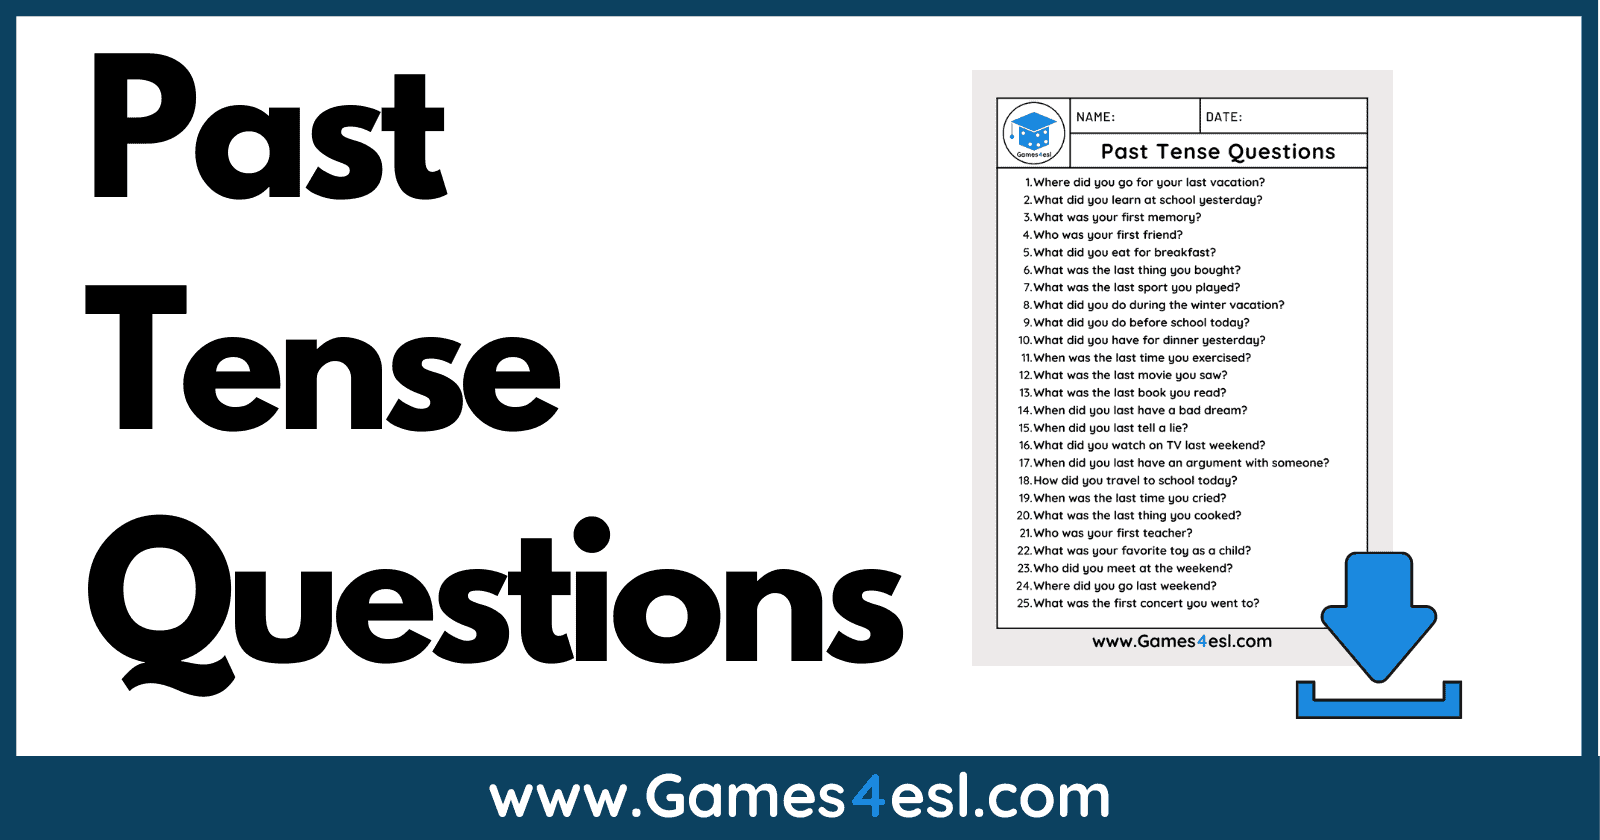 25 Past Tense Questions | Games4esl